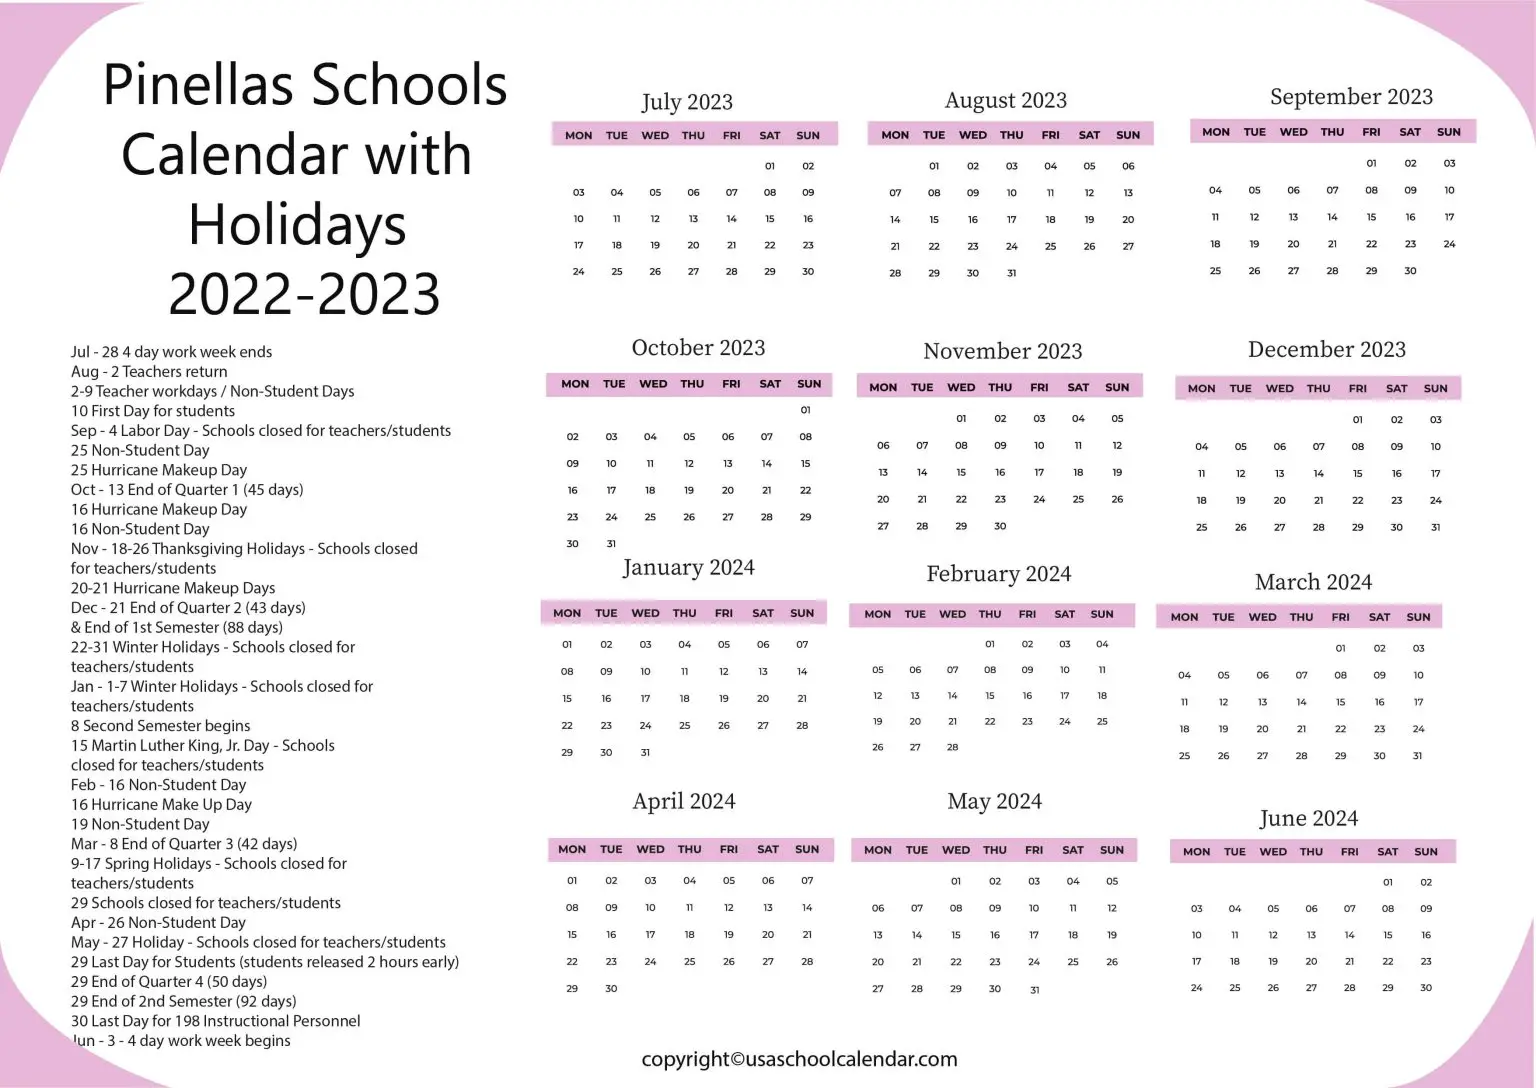 Pinellas Schools Calendar with Holidays 2023 2024